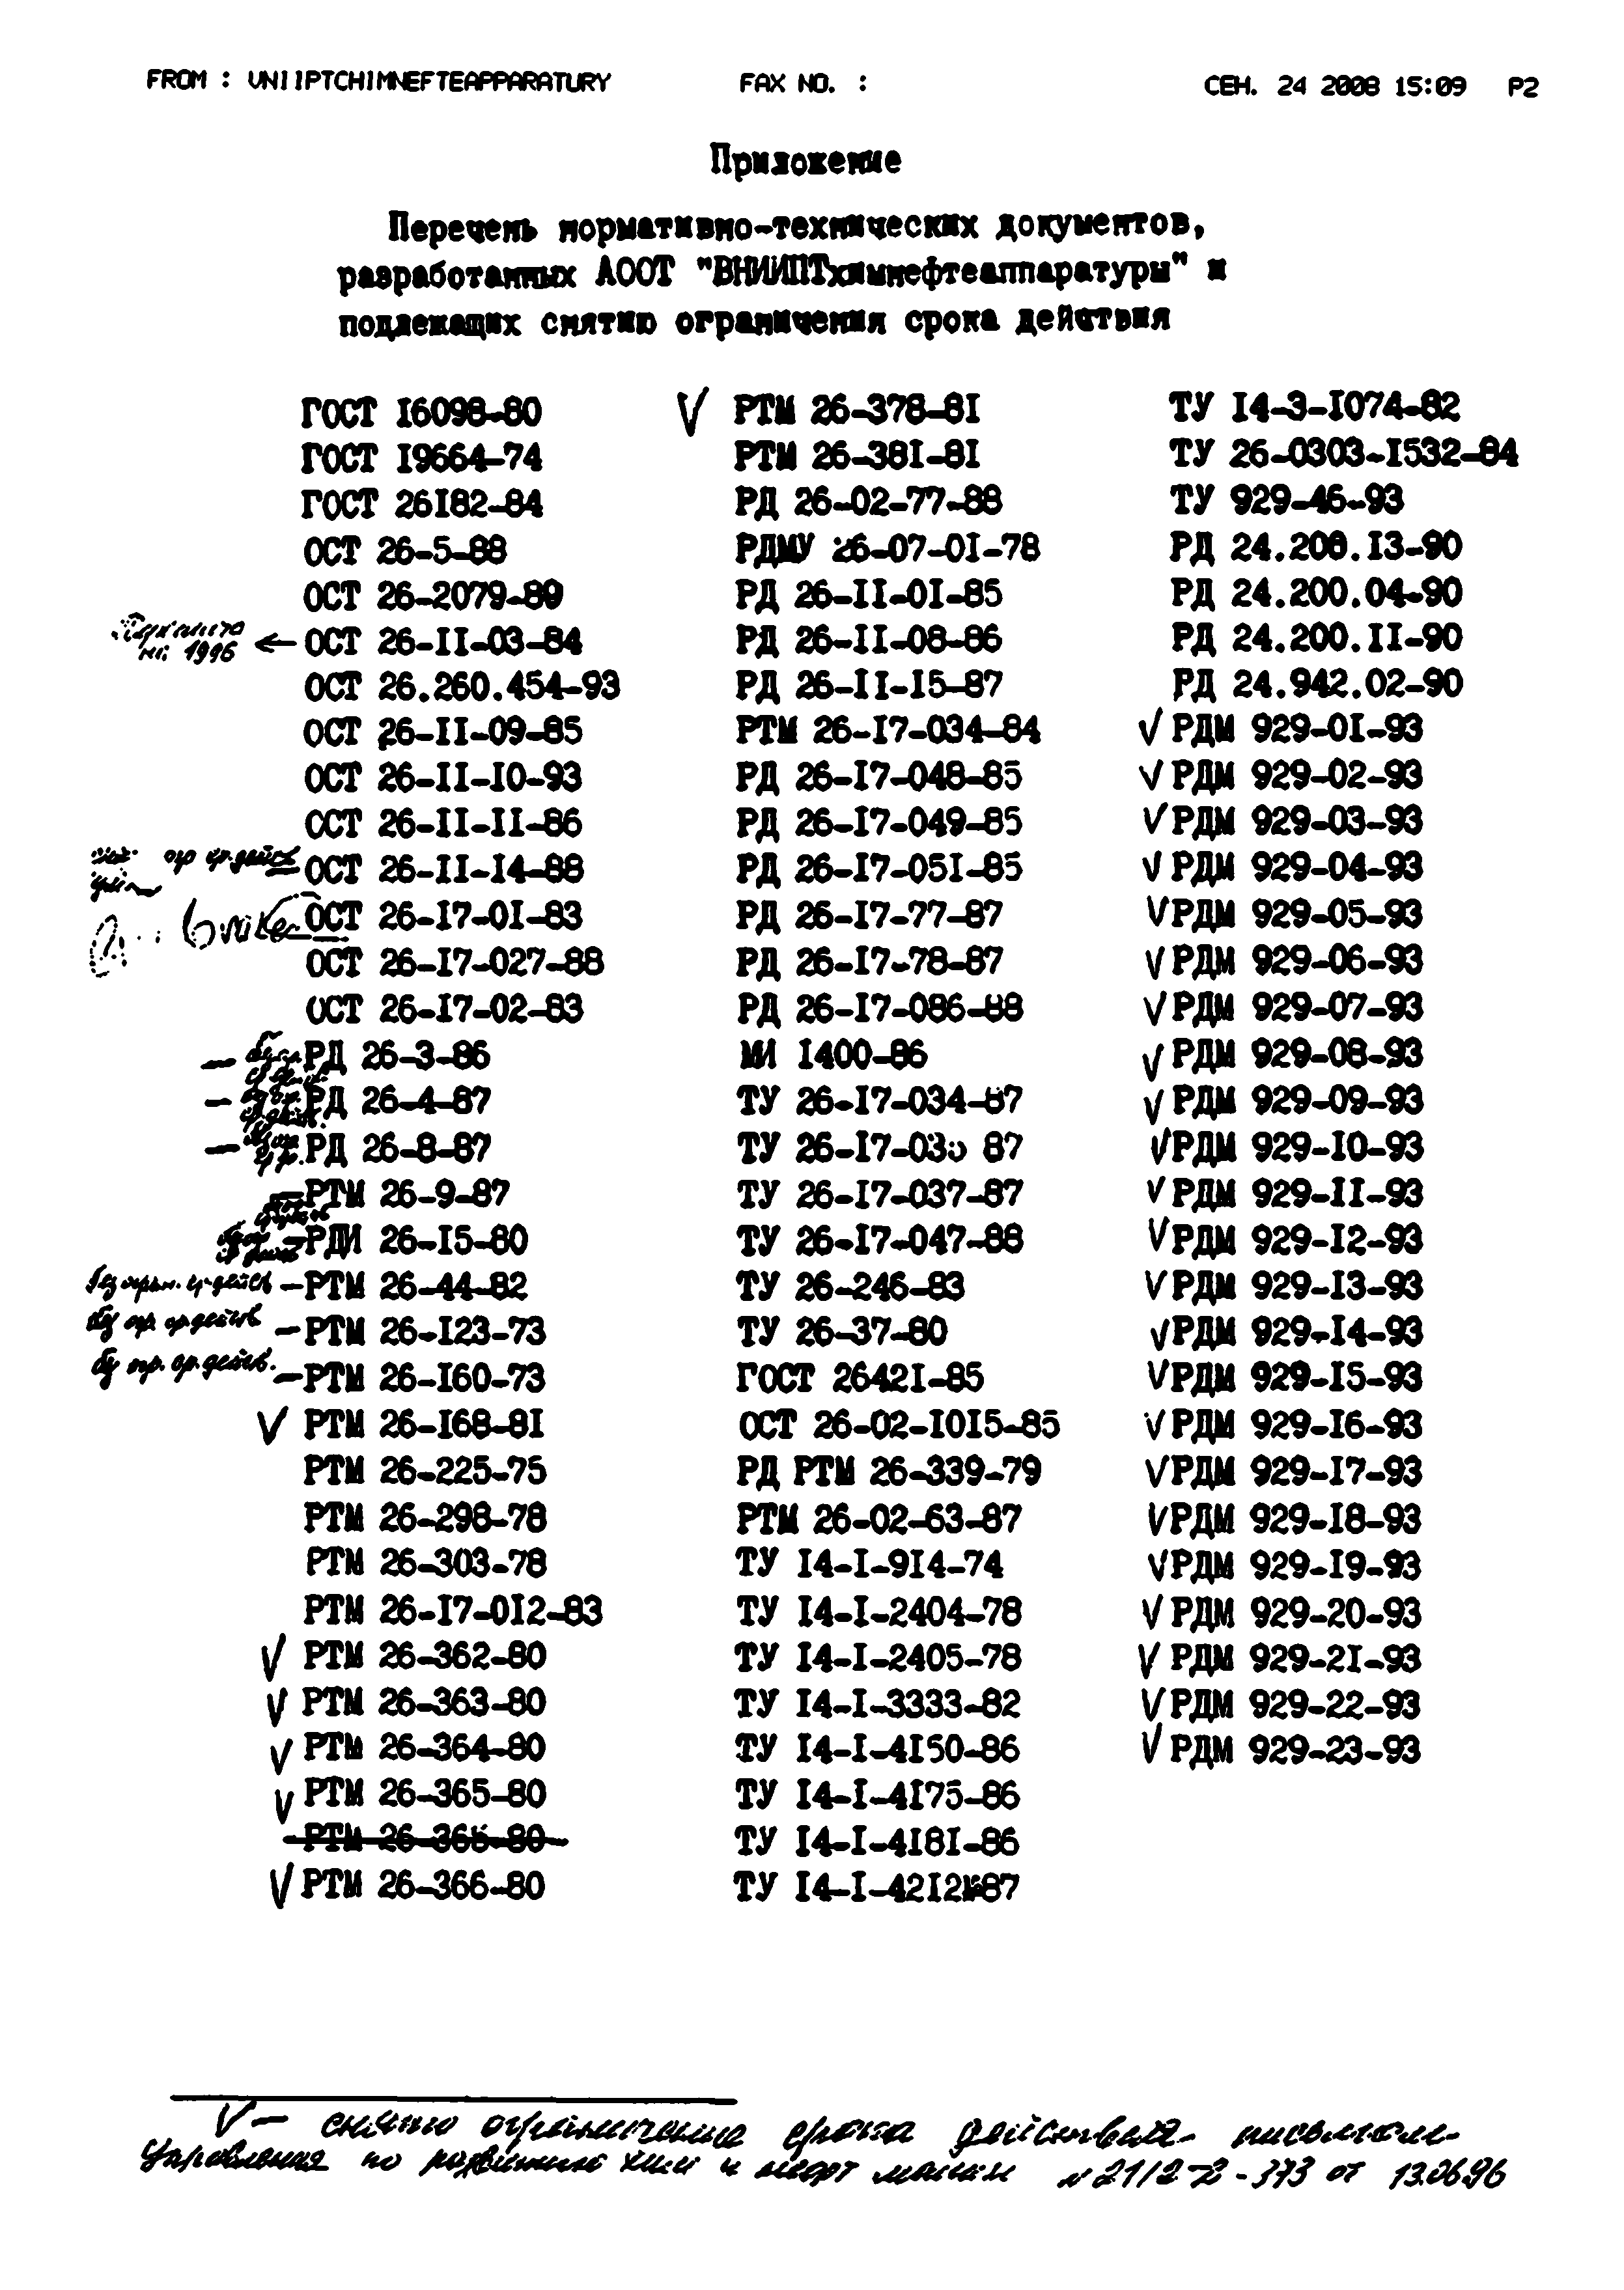 РДМ 929-16-93